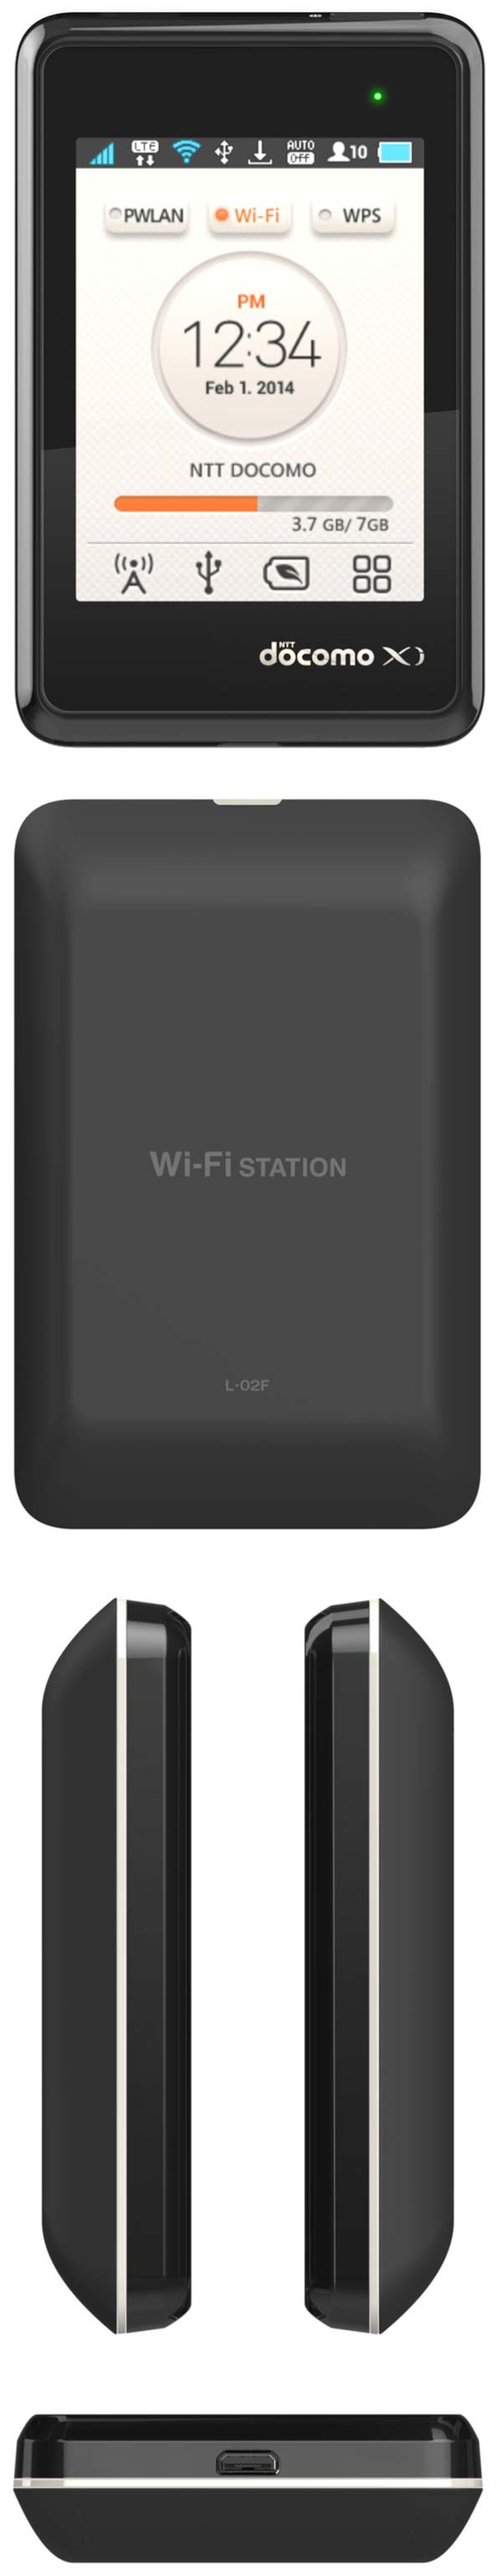 Новый роутер Wi-Fi STATION L-02F от NTT docomo 